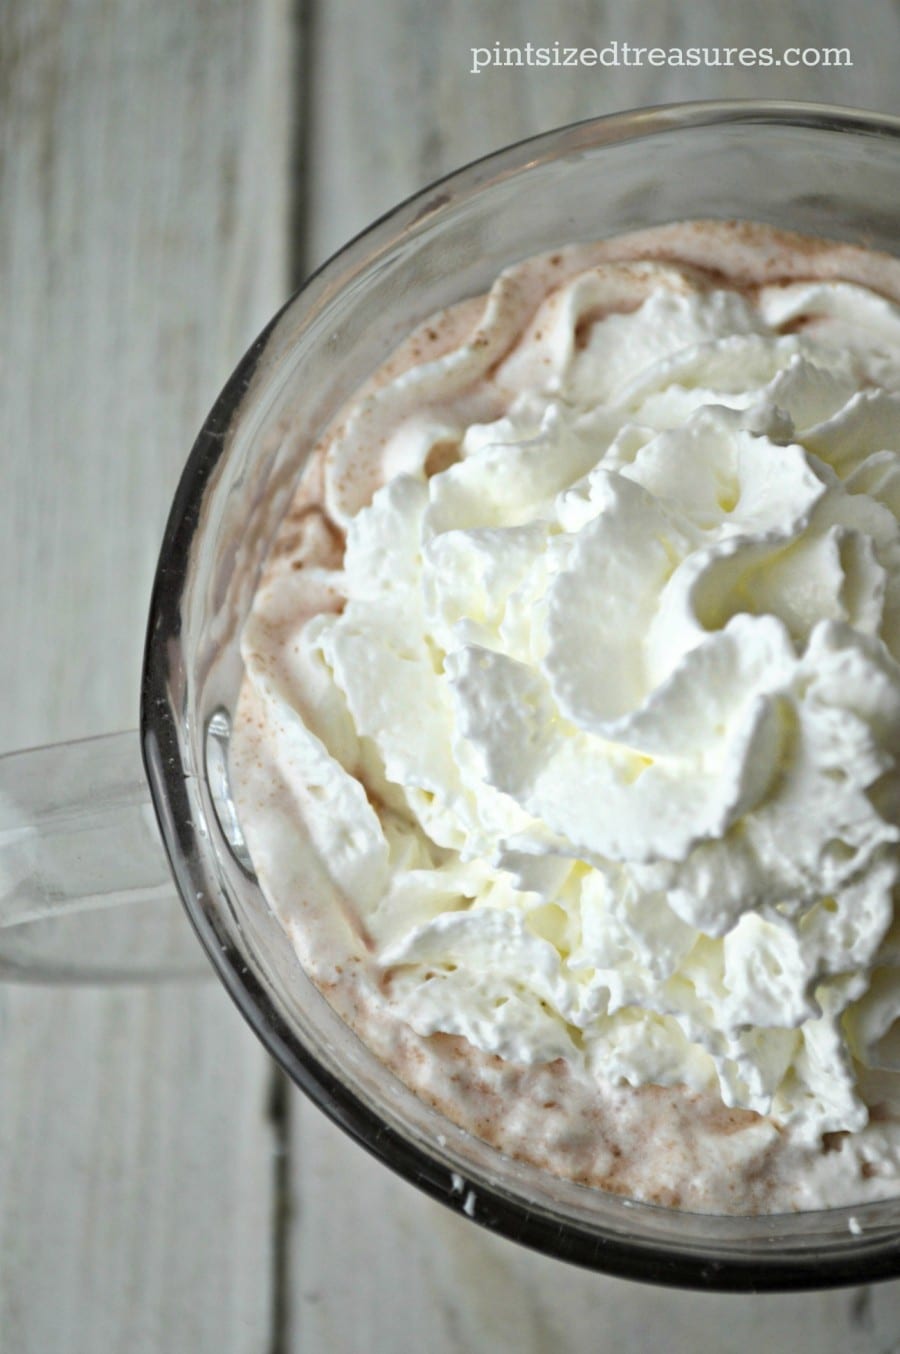 hot chocolate with white chocolate